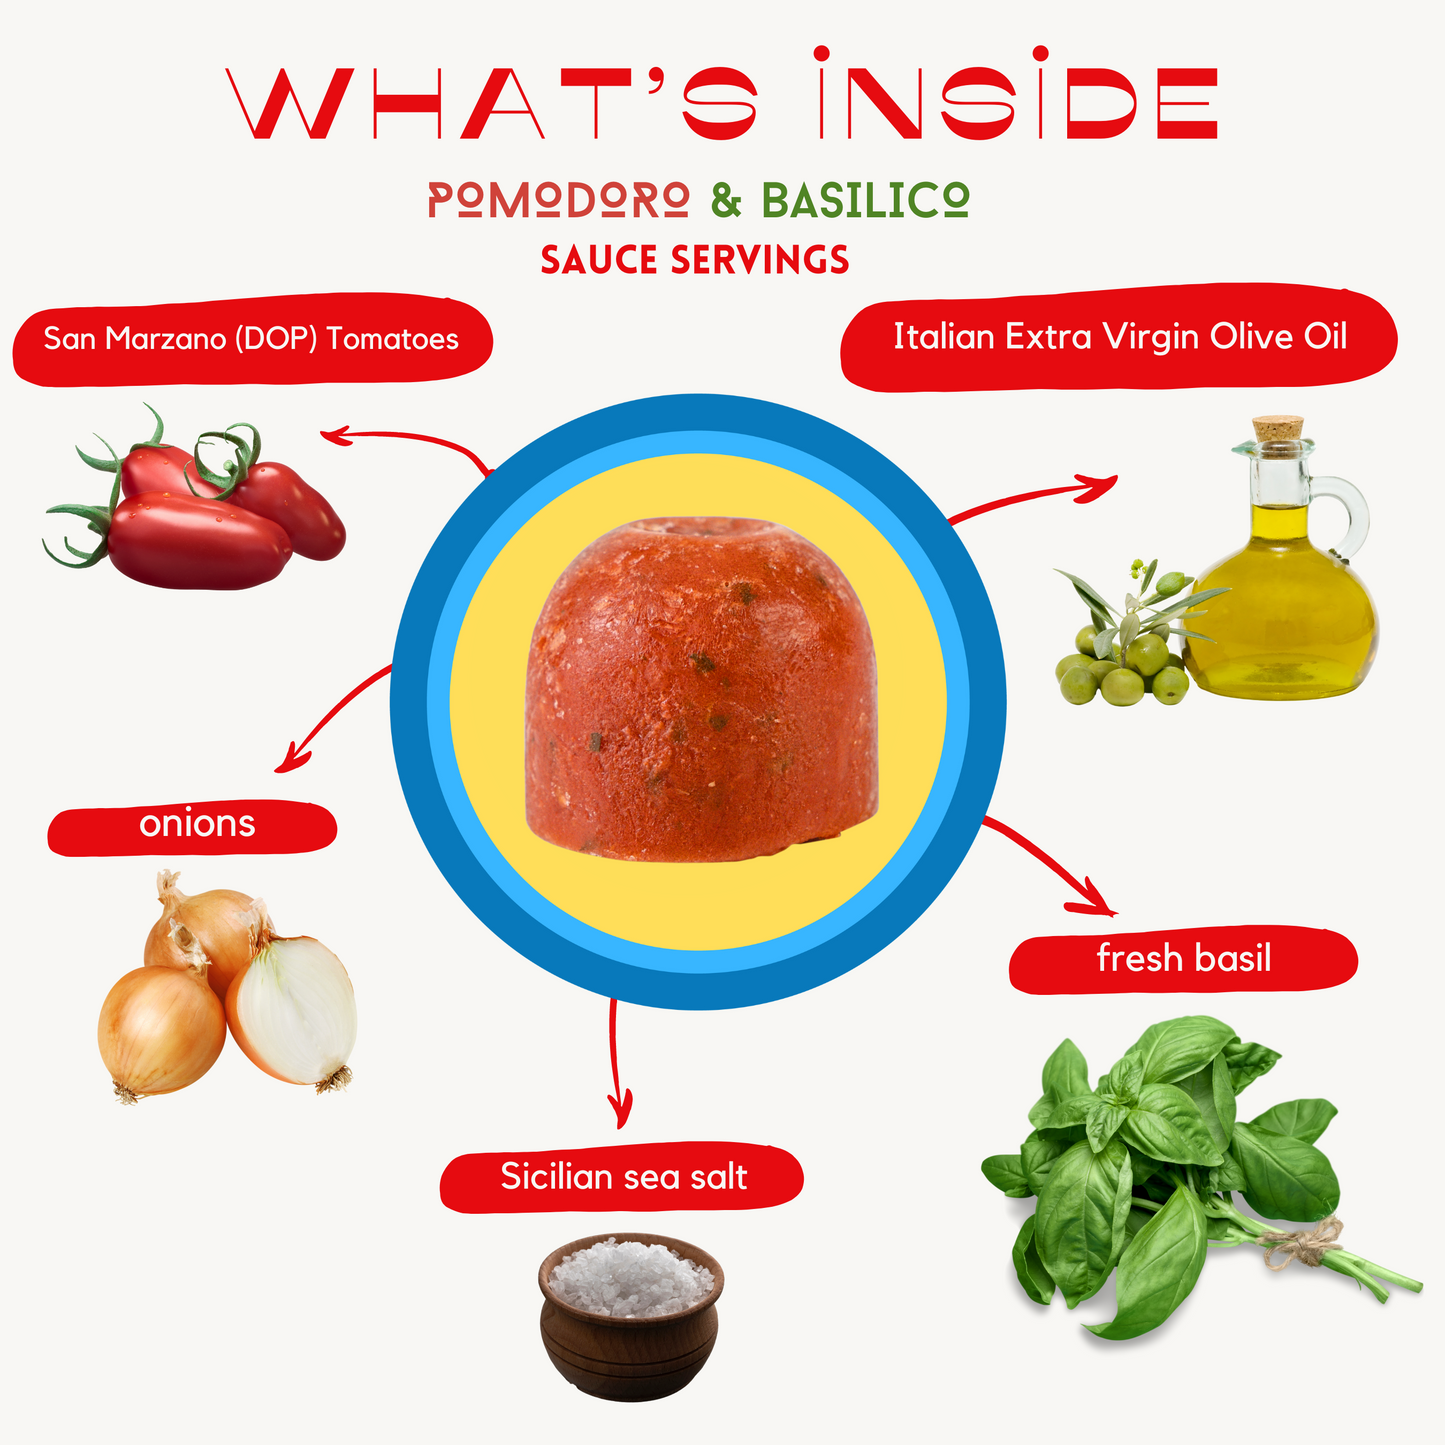 Pomodoro & Basilico Sauce Servings